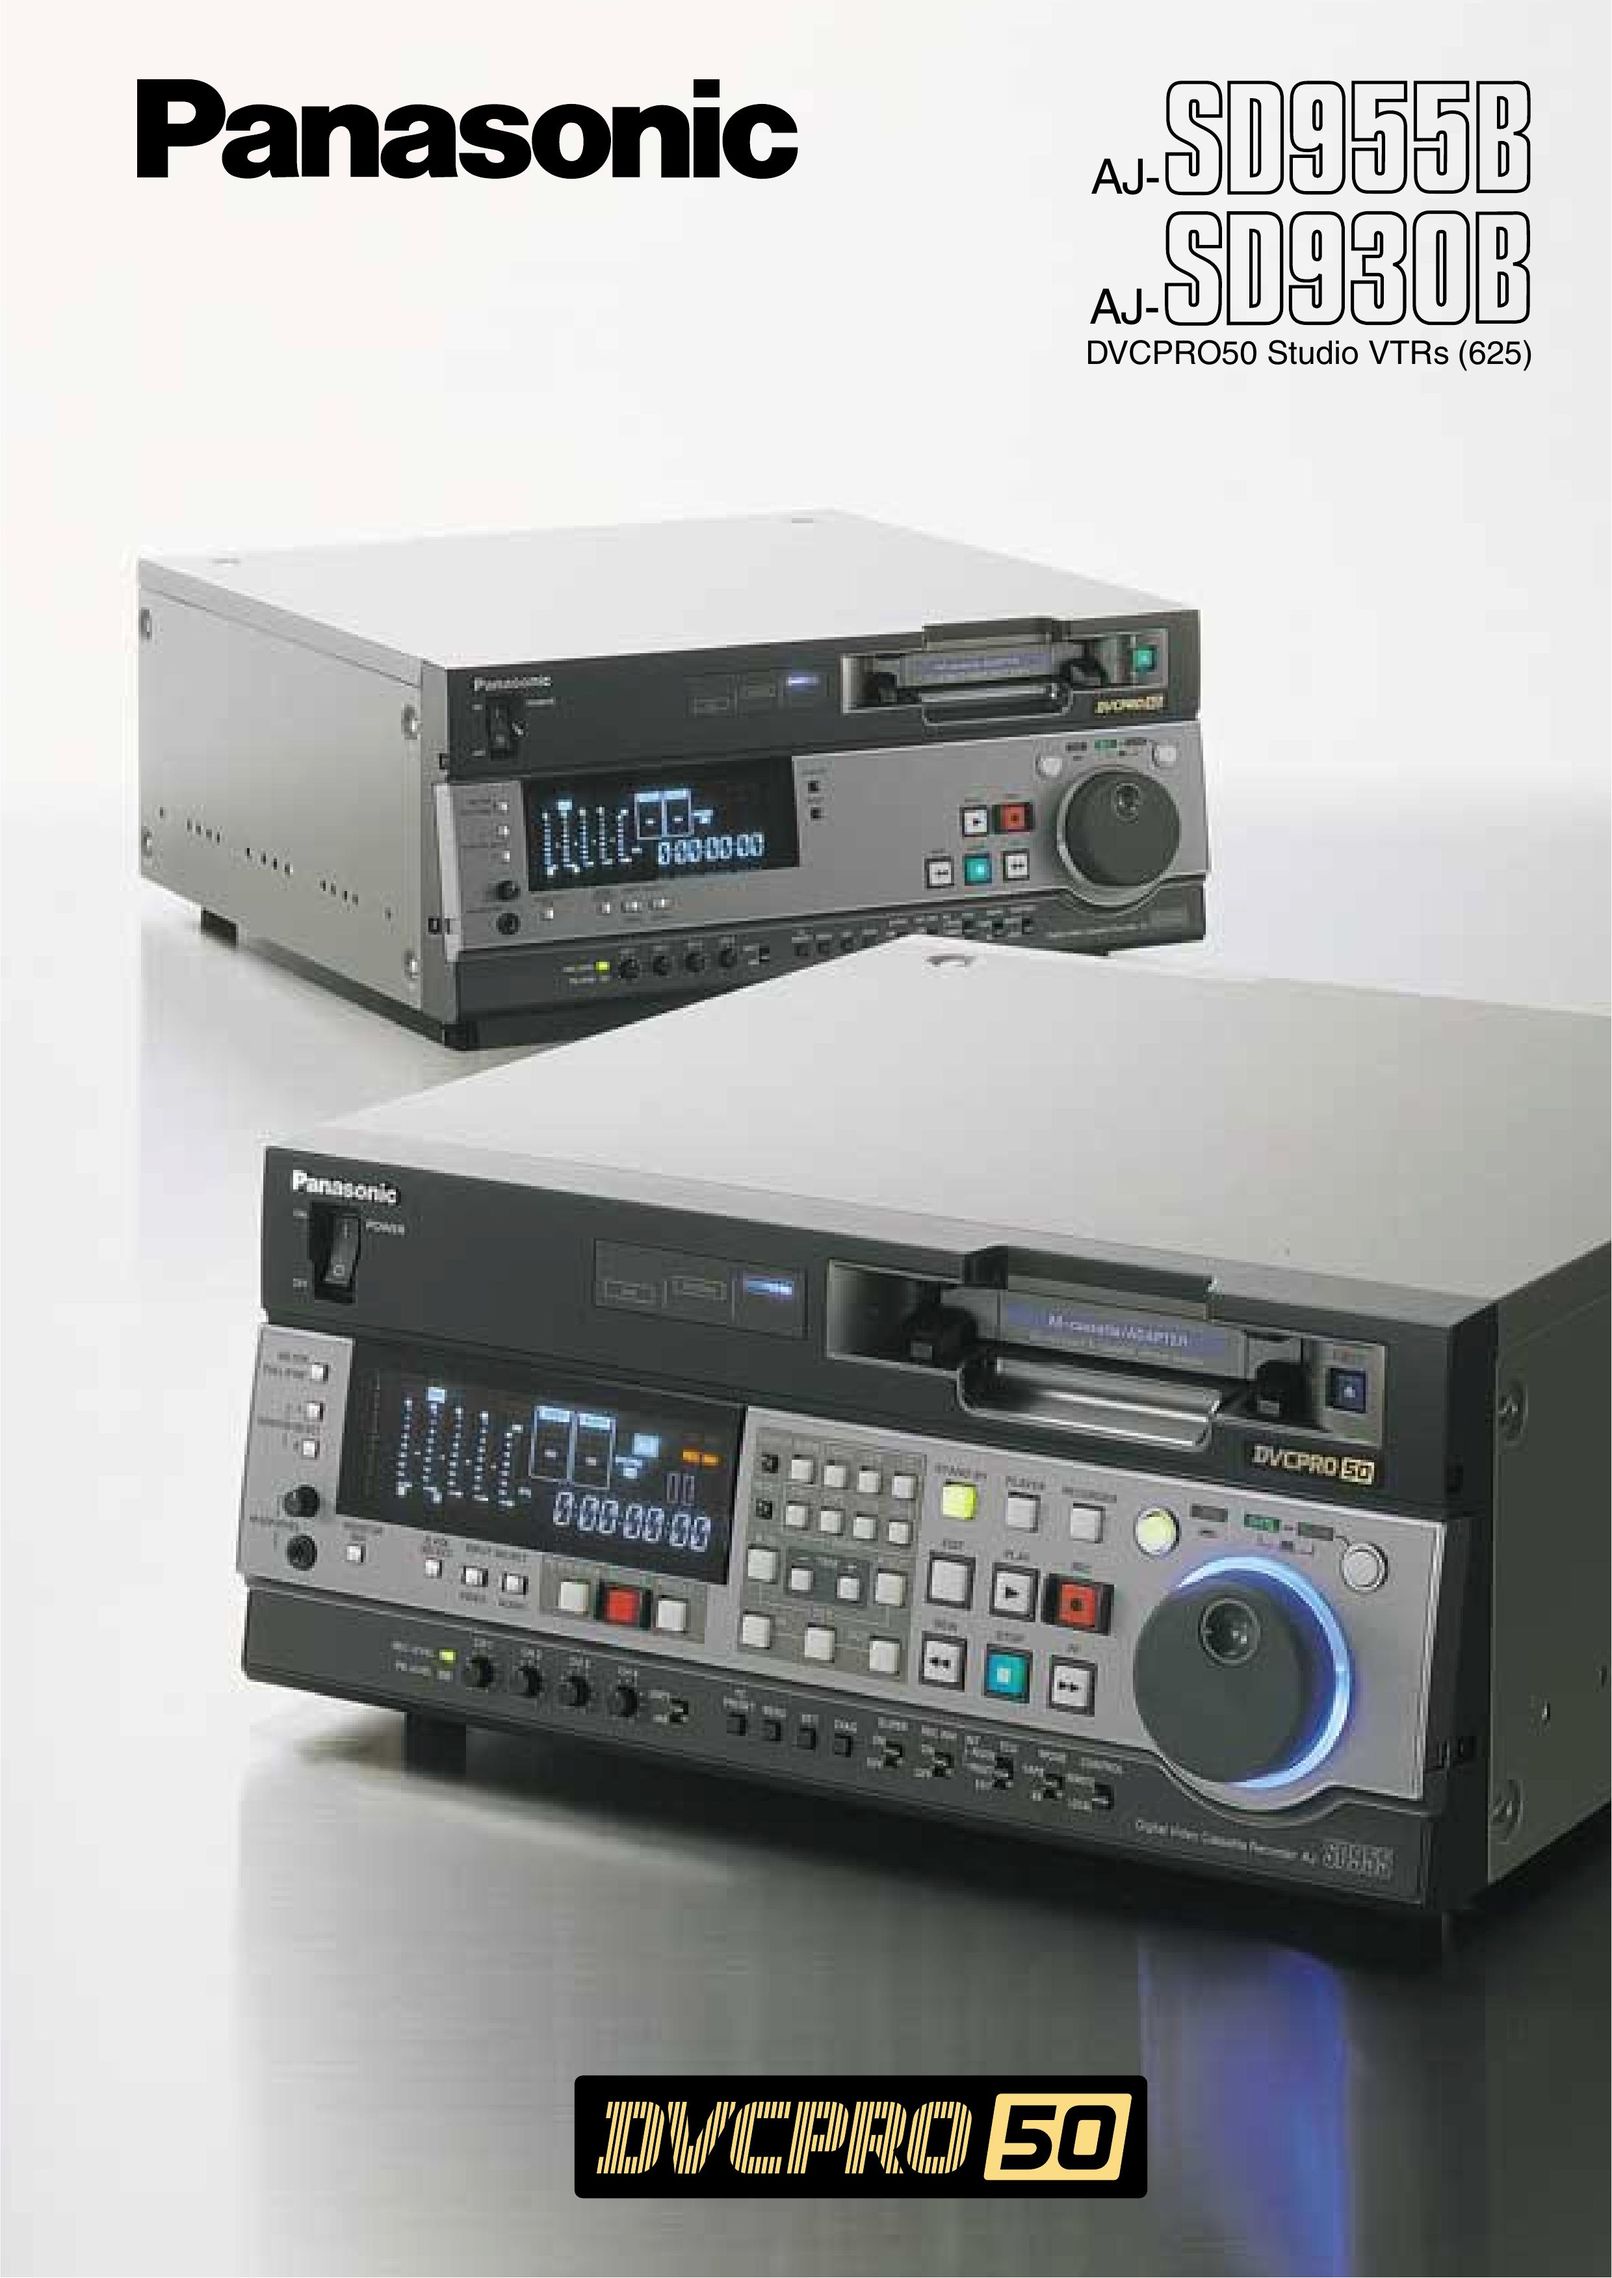 Panasonic DVCPRO50 Stereo Receiver User Manual